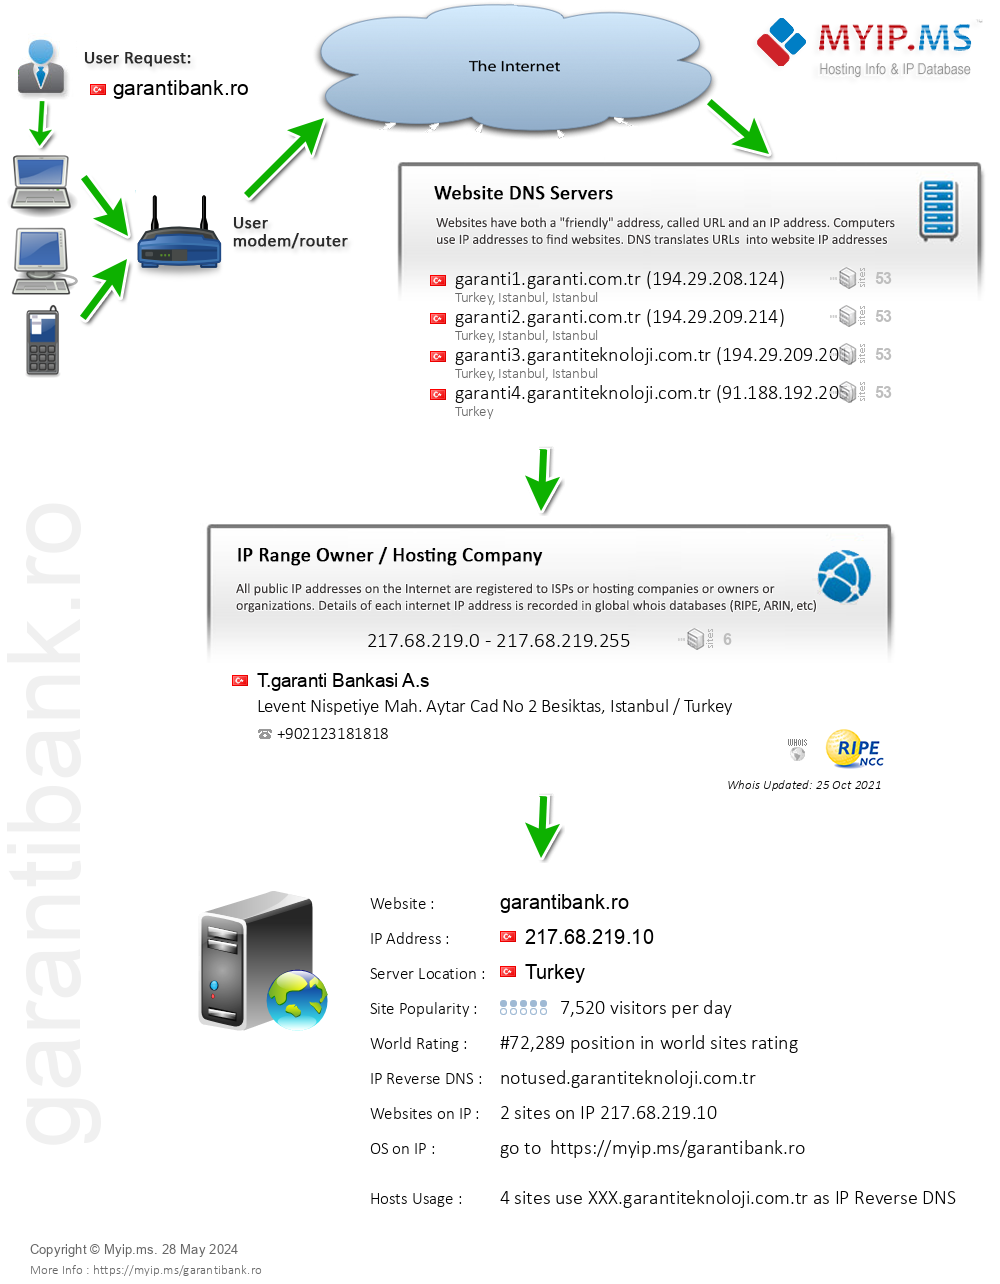 Garantibank.ro - Website Hosting Visual IP Diagram